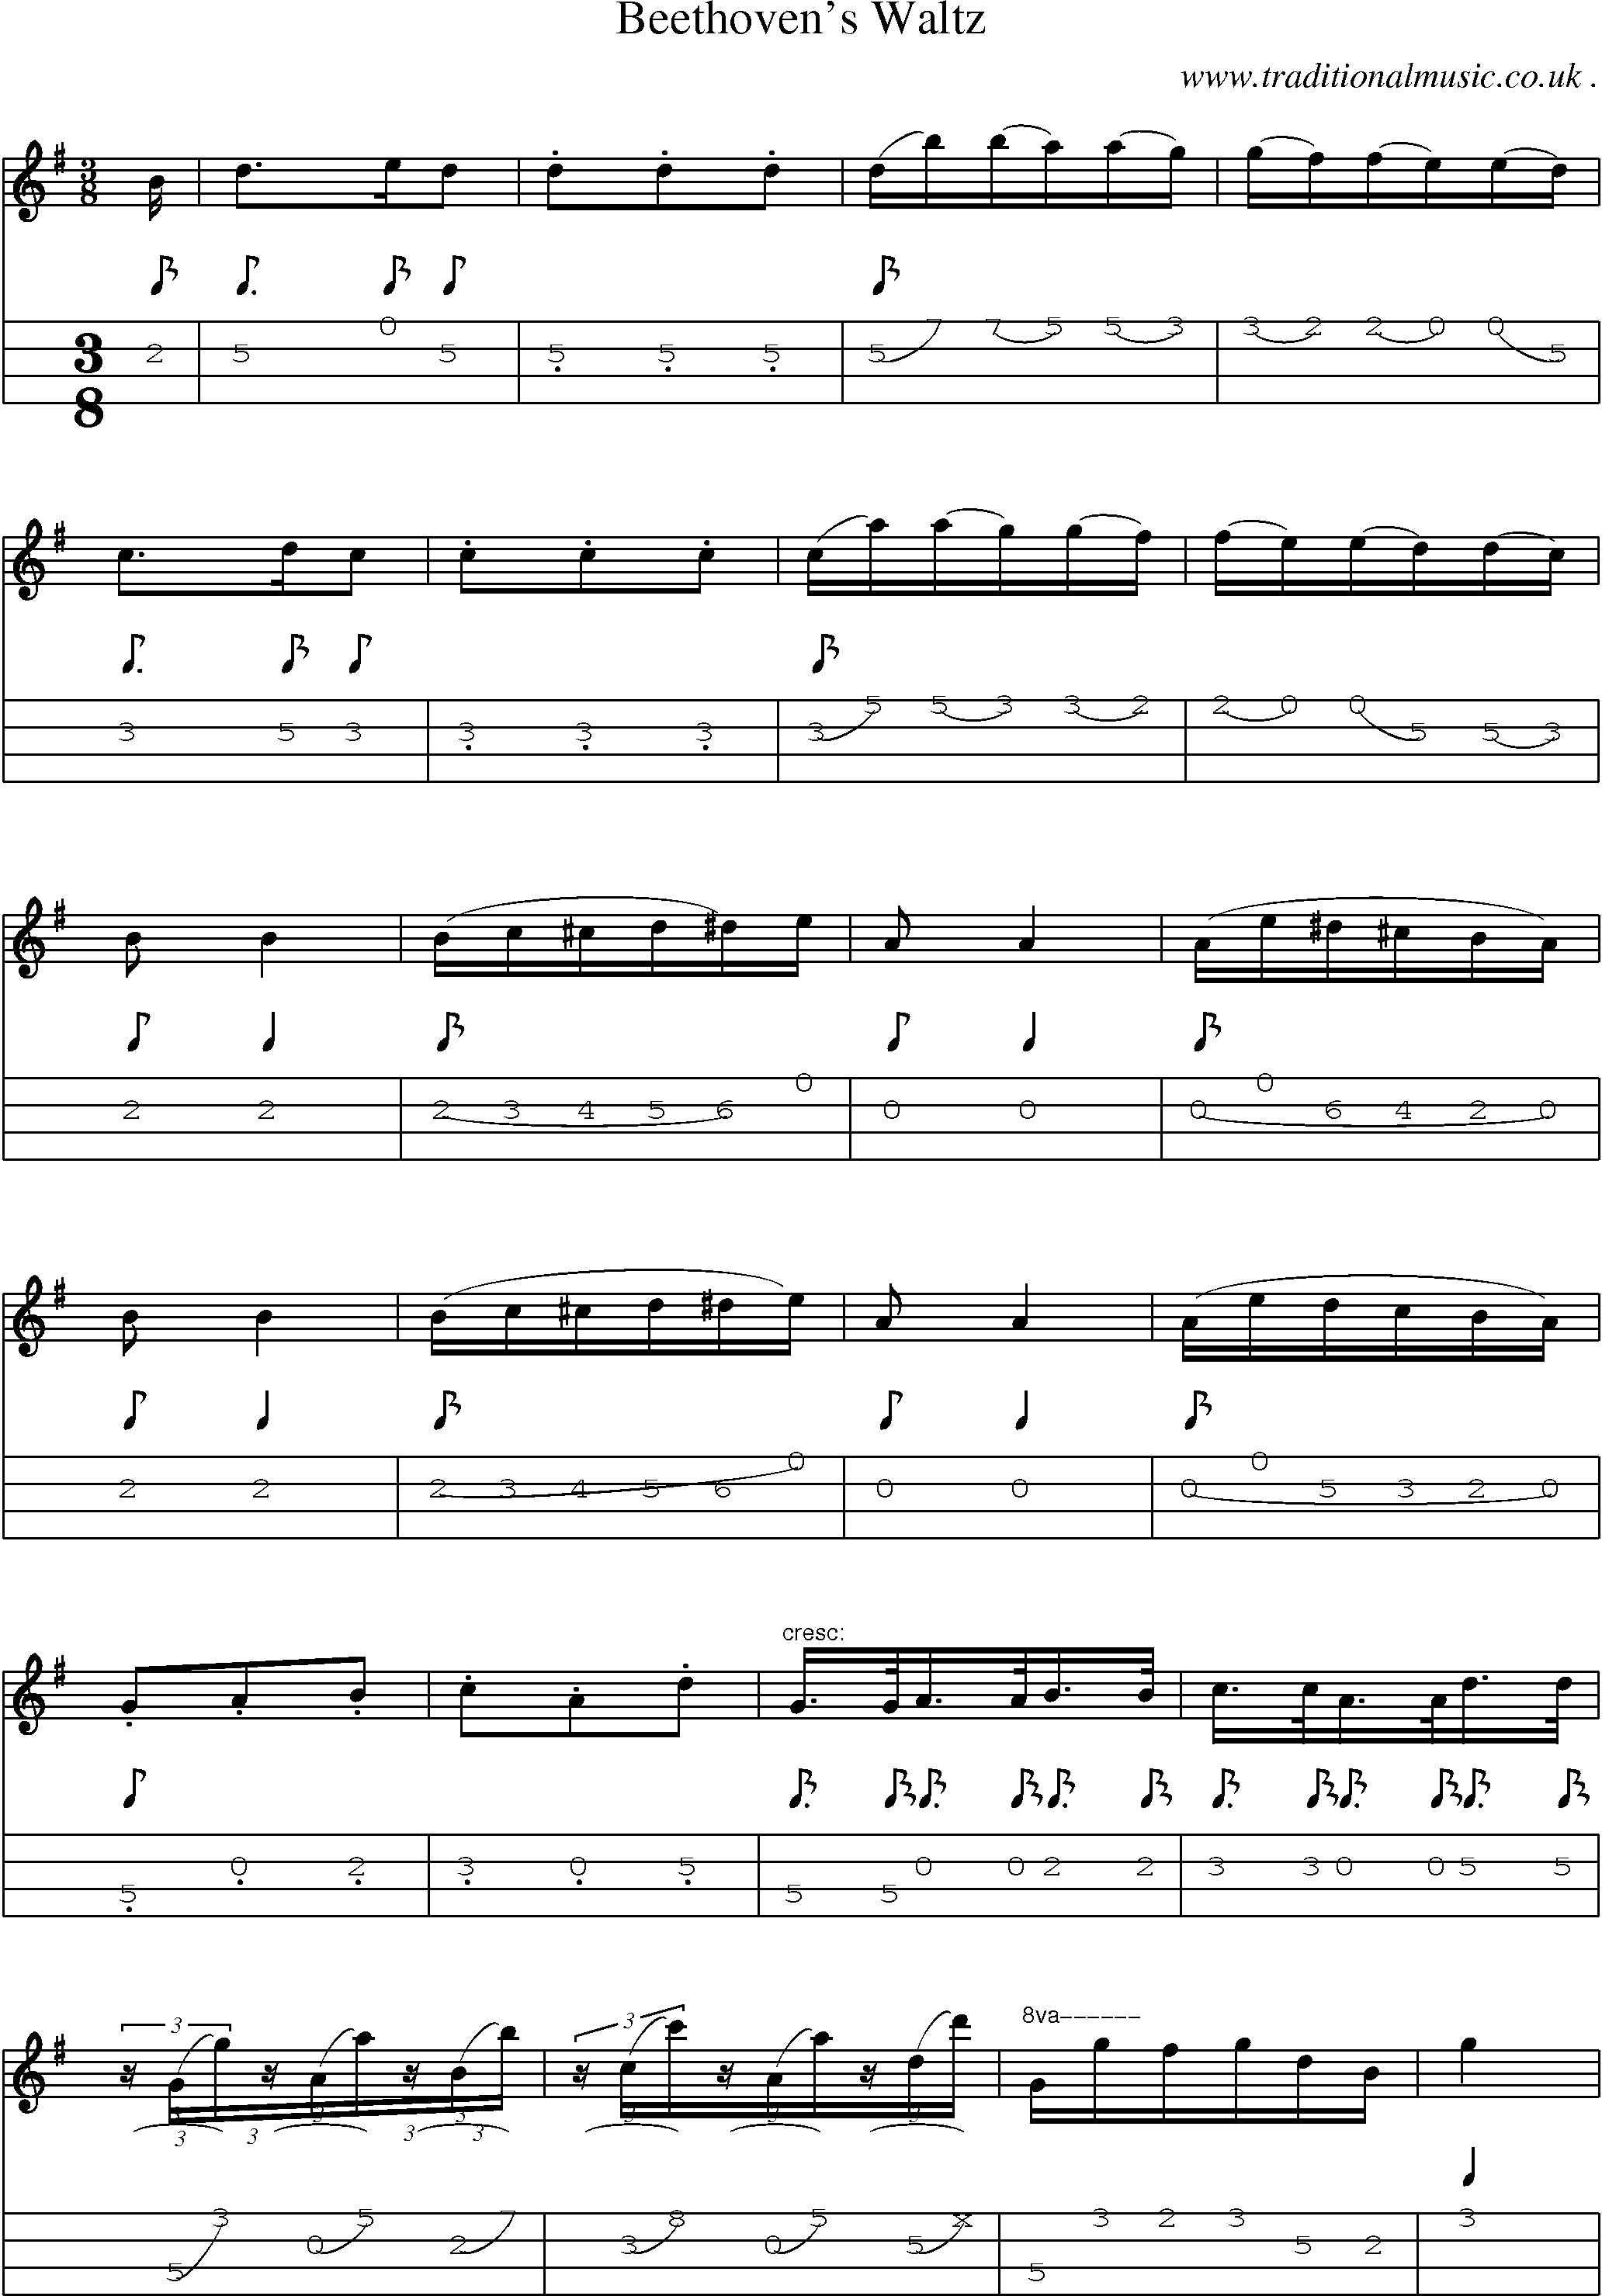 Sheet-Music and Mandolin Tabs for Beethovens Waltz